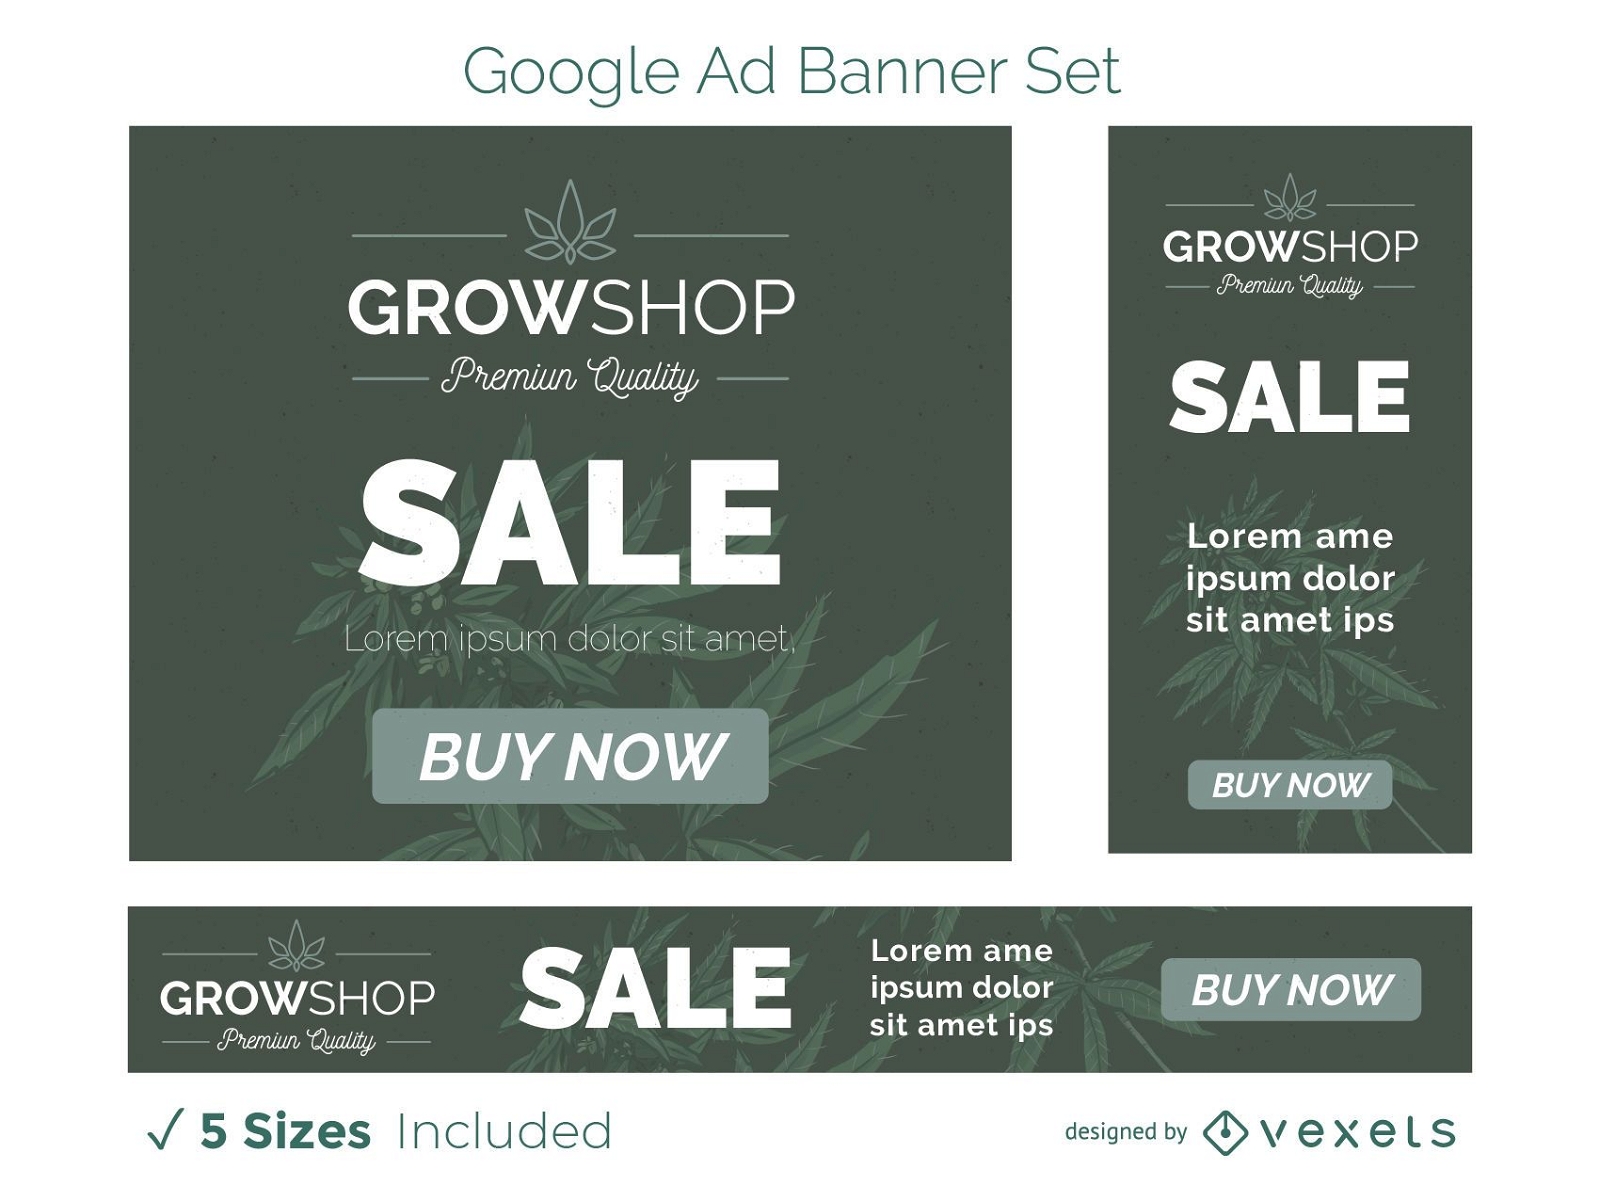 Grow shop ad banner set